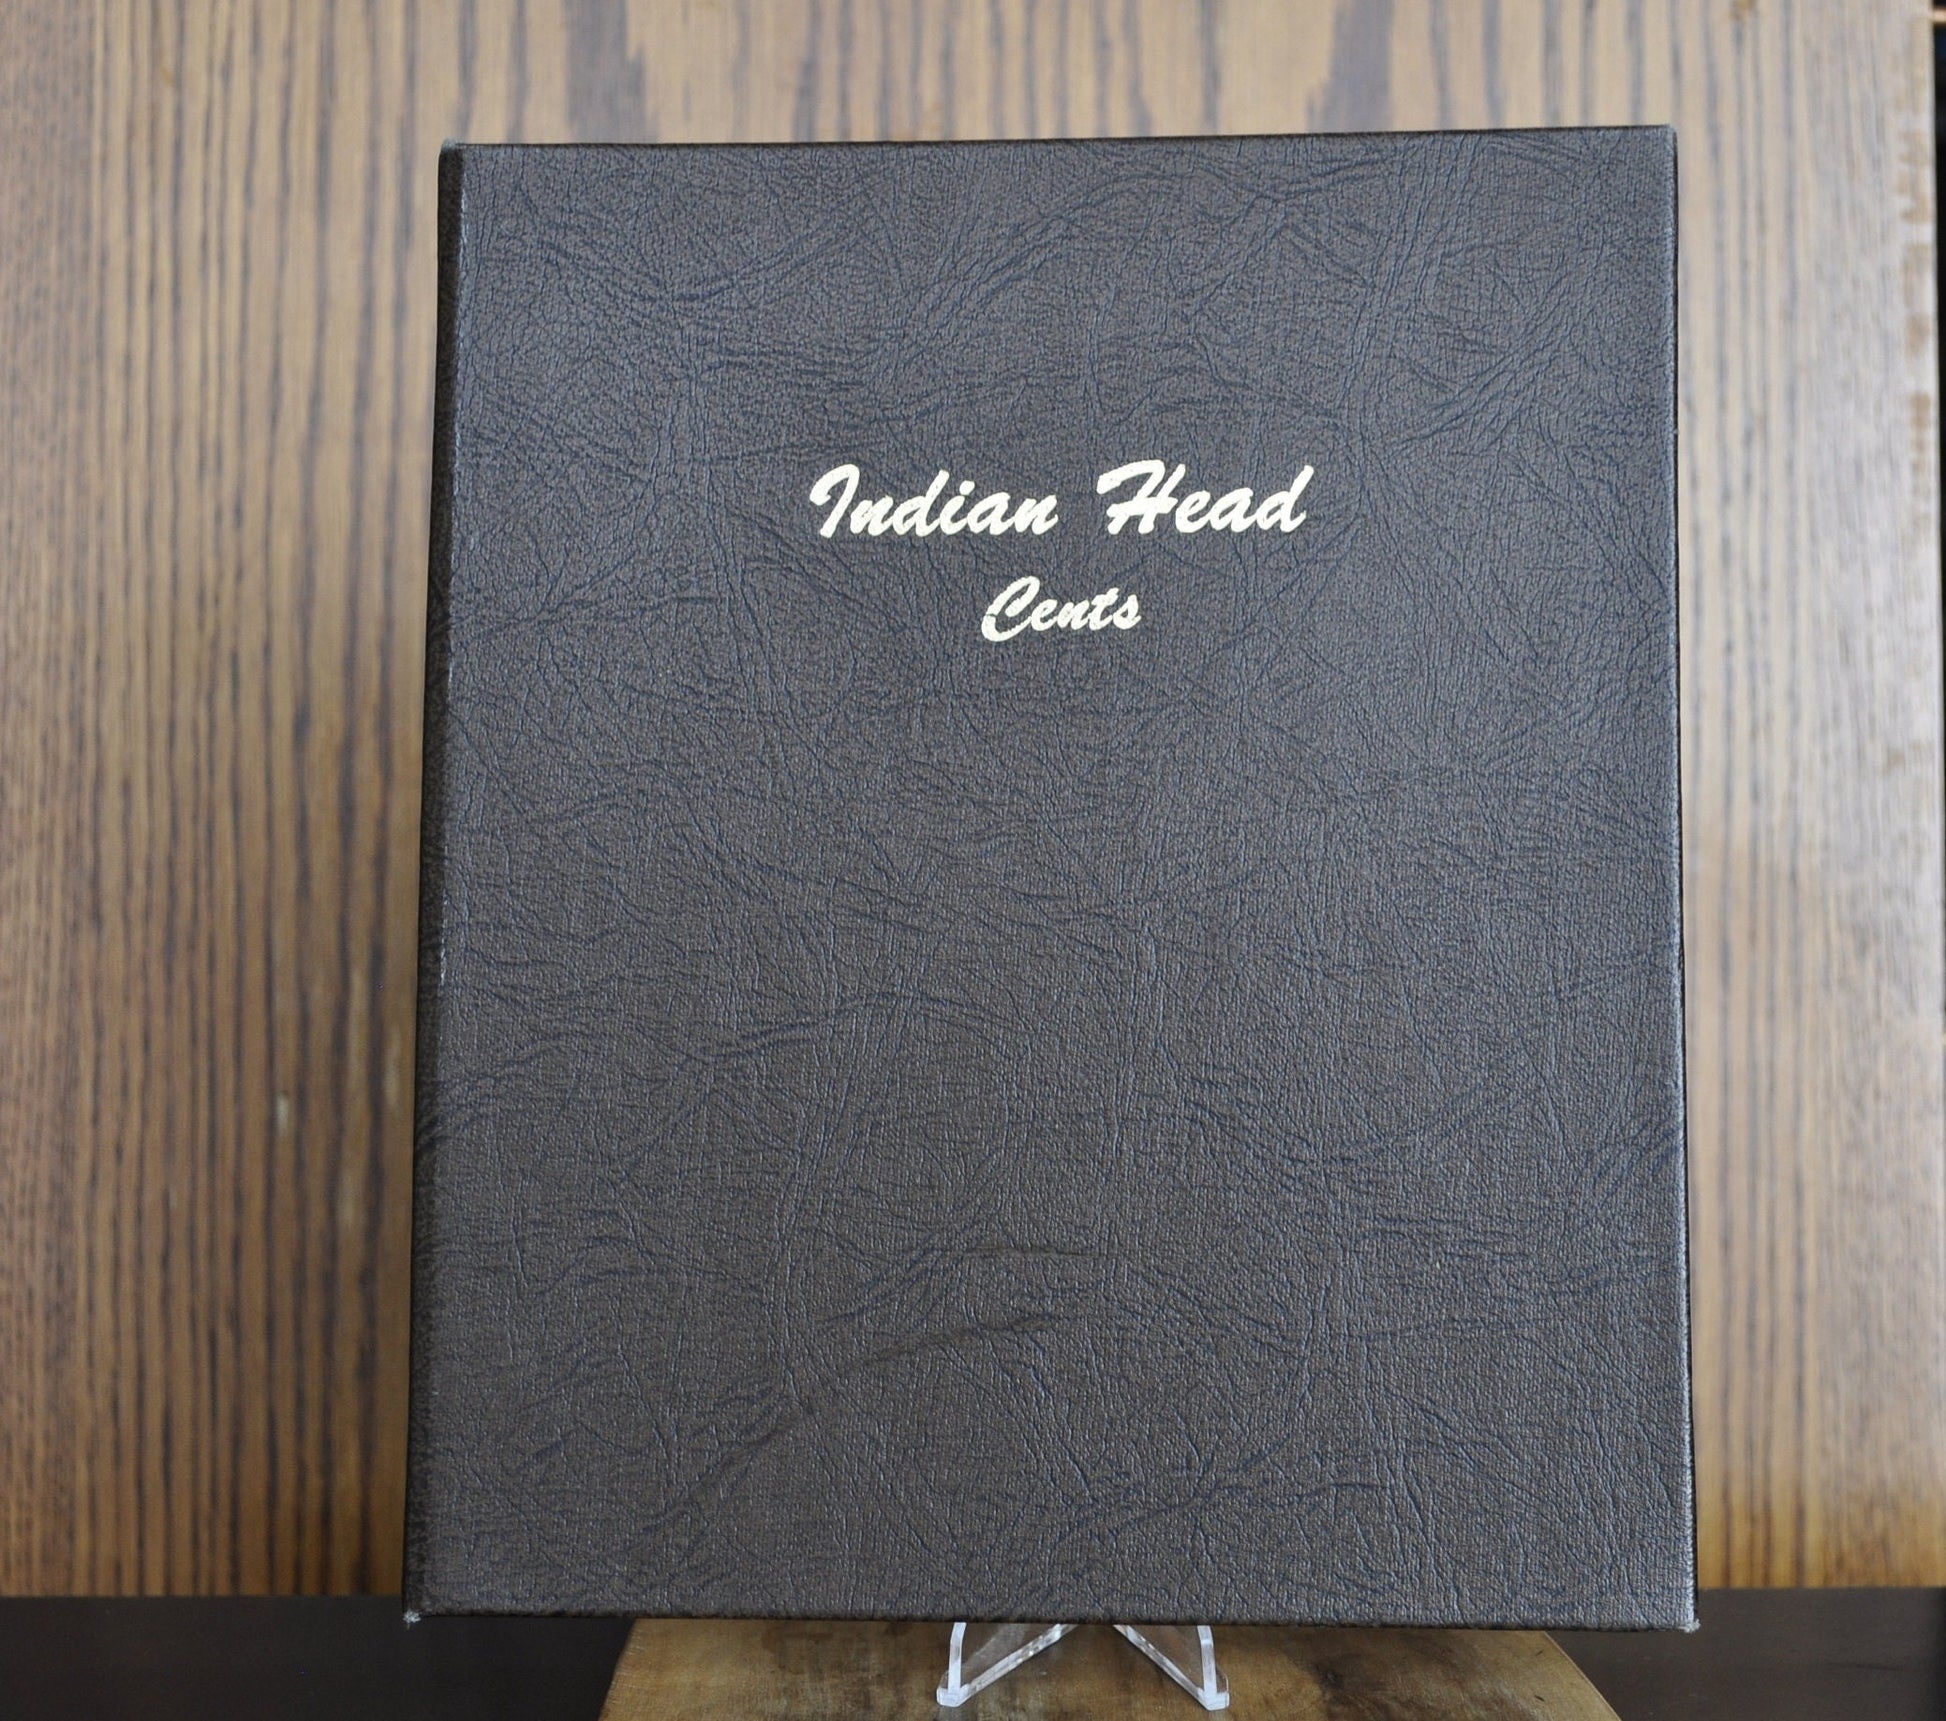 Dansco Indian Head Cent & Flying Eagle Album 1857-1909, No. 7101 - Used, Like New - Indian Head Cents, Dansco Album No. 7101